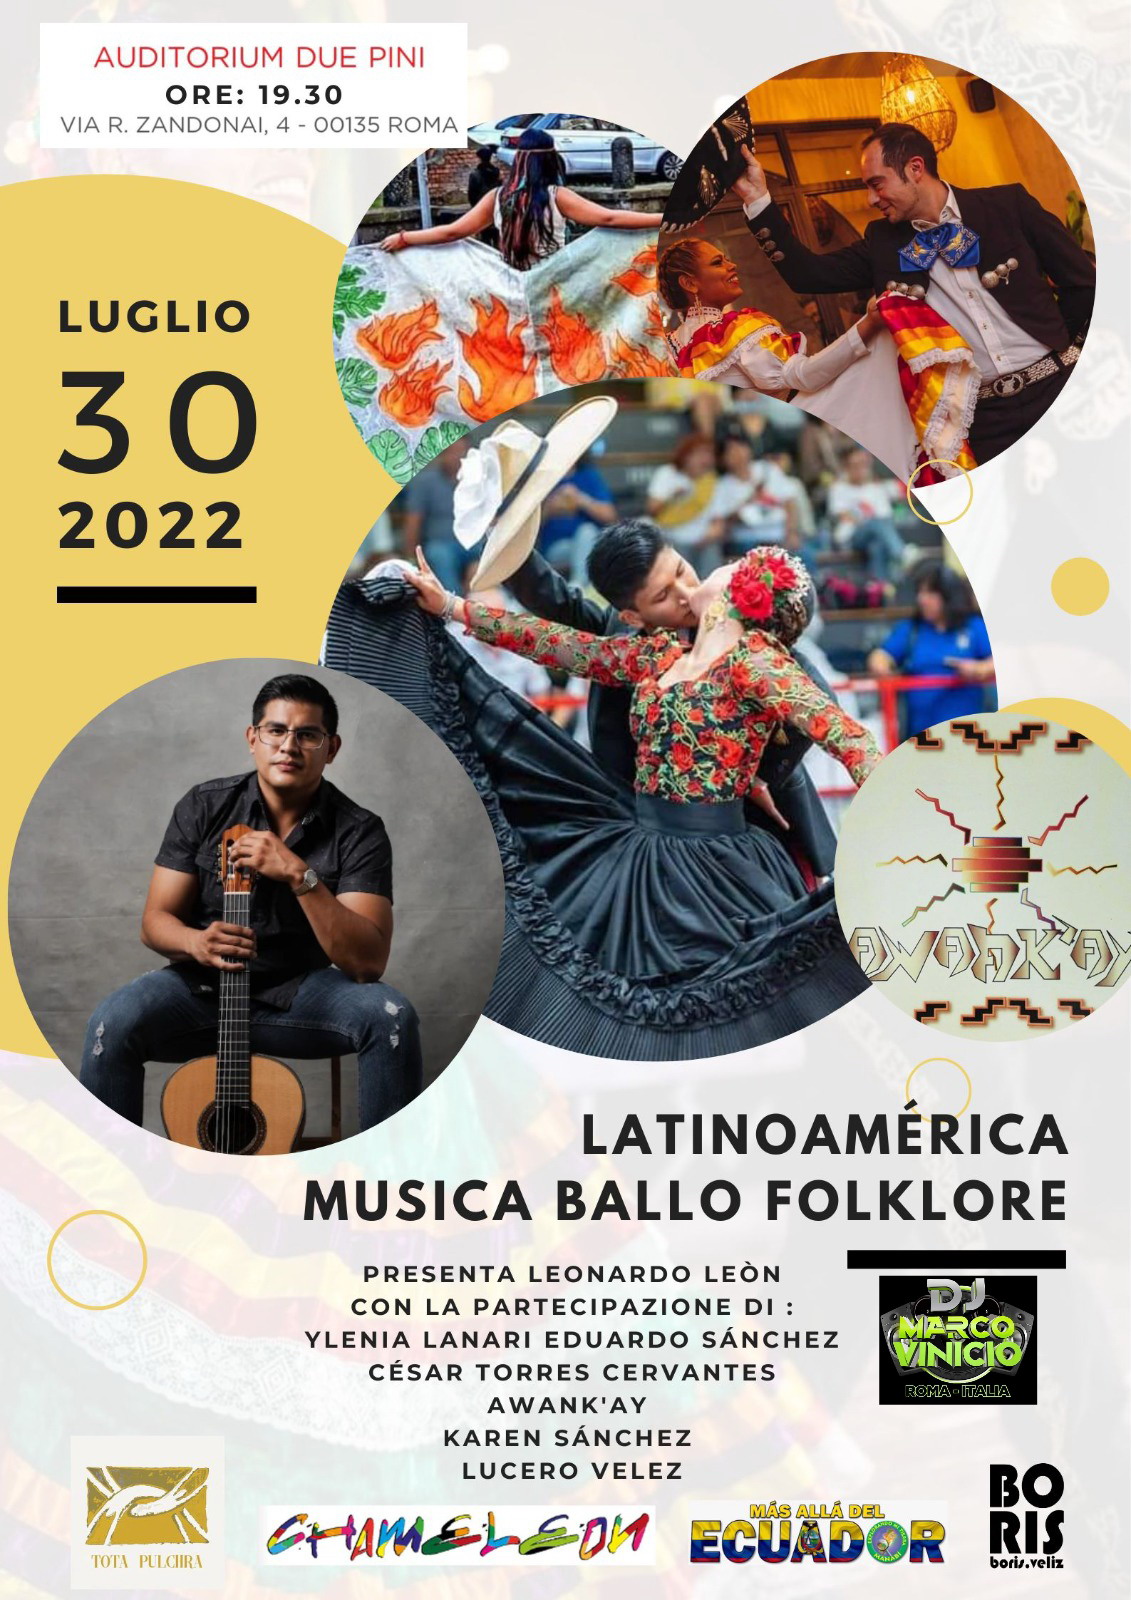 Latinoamérica - Musica ballo folklore